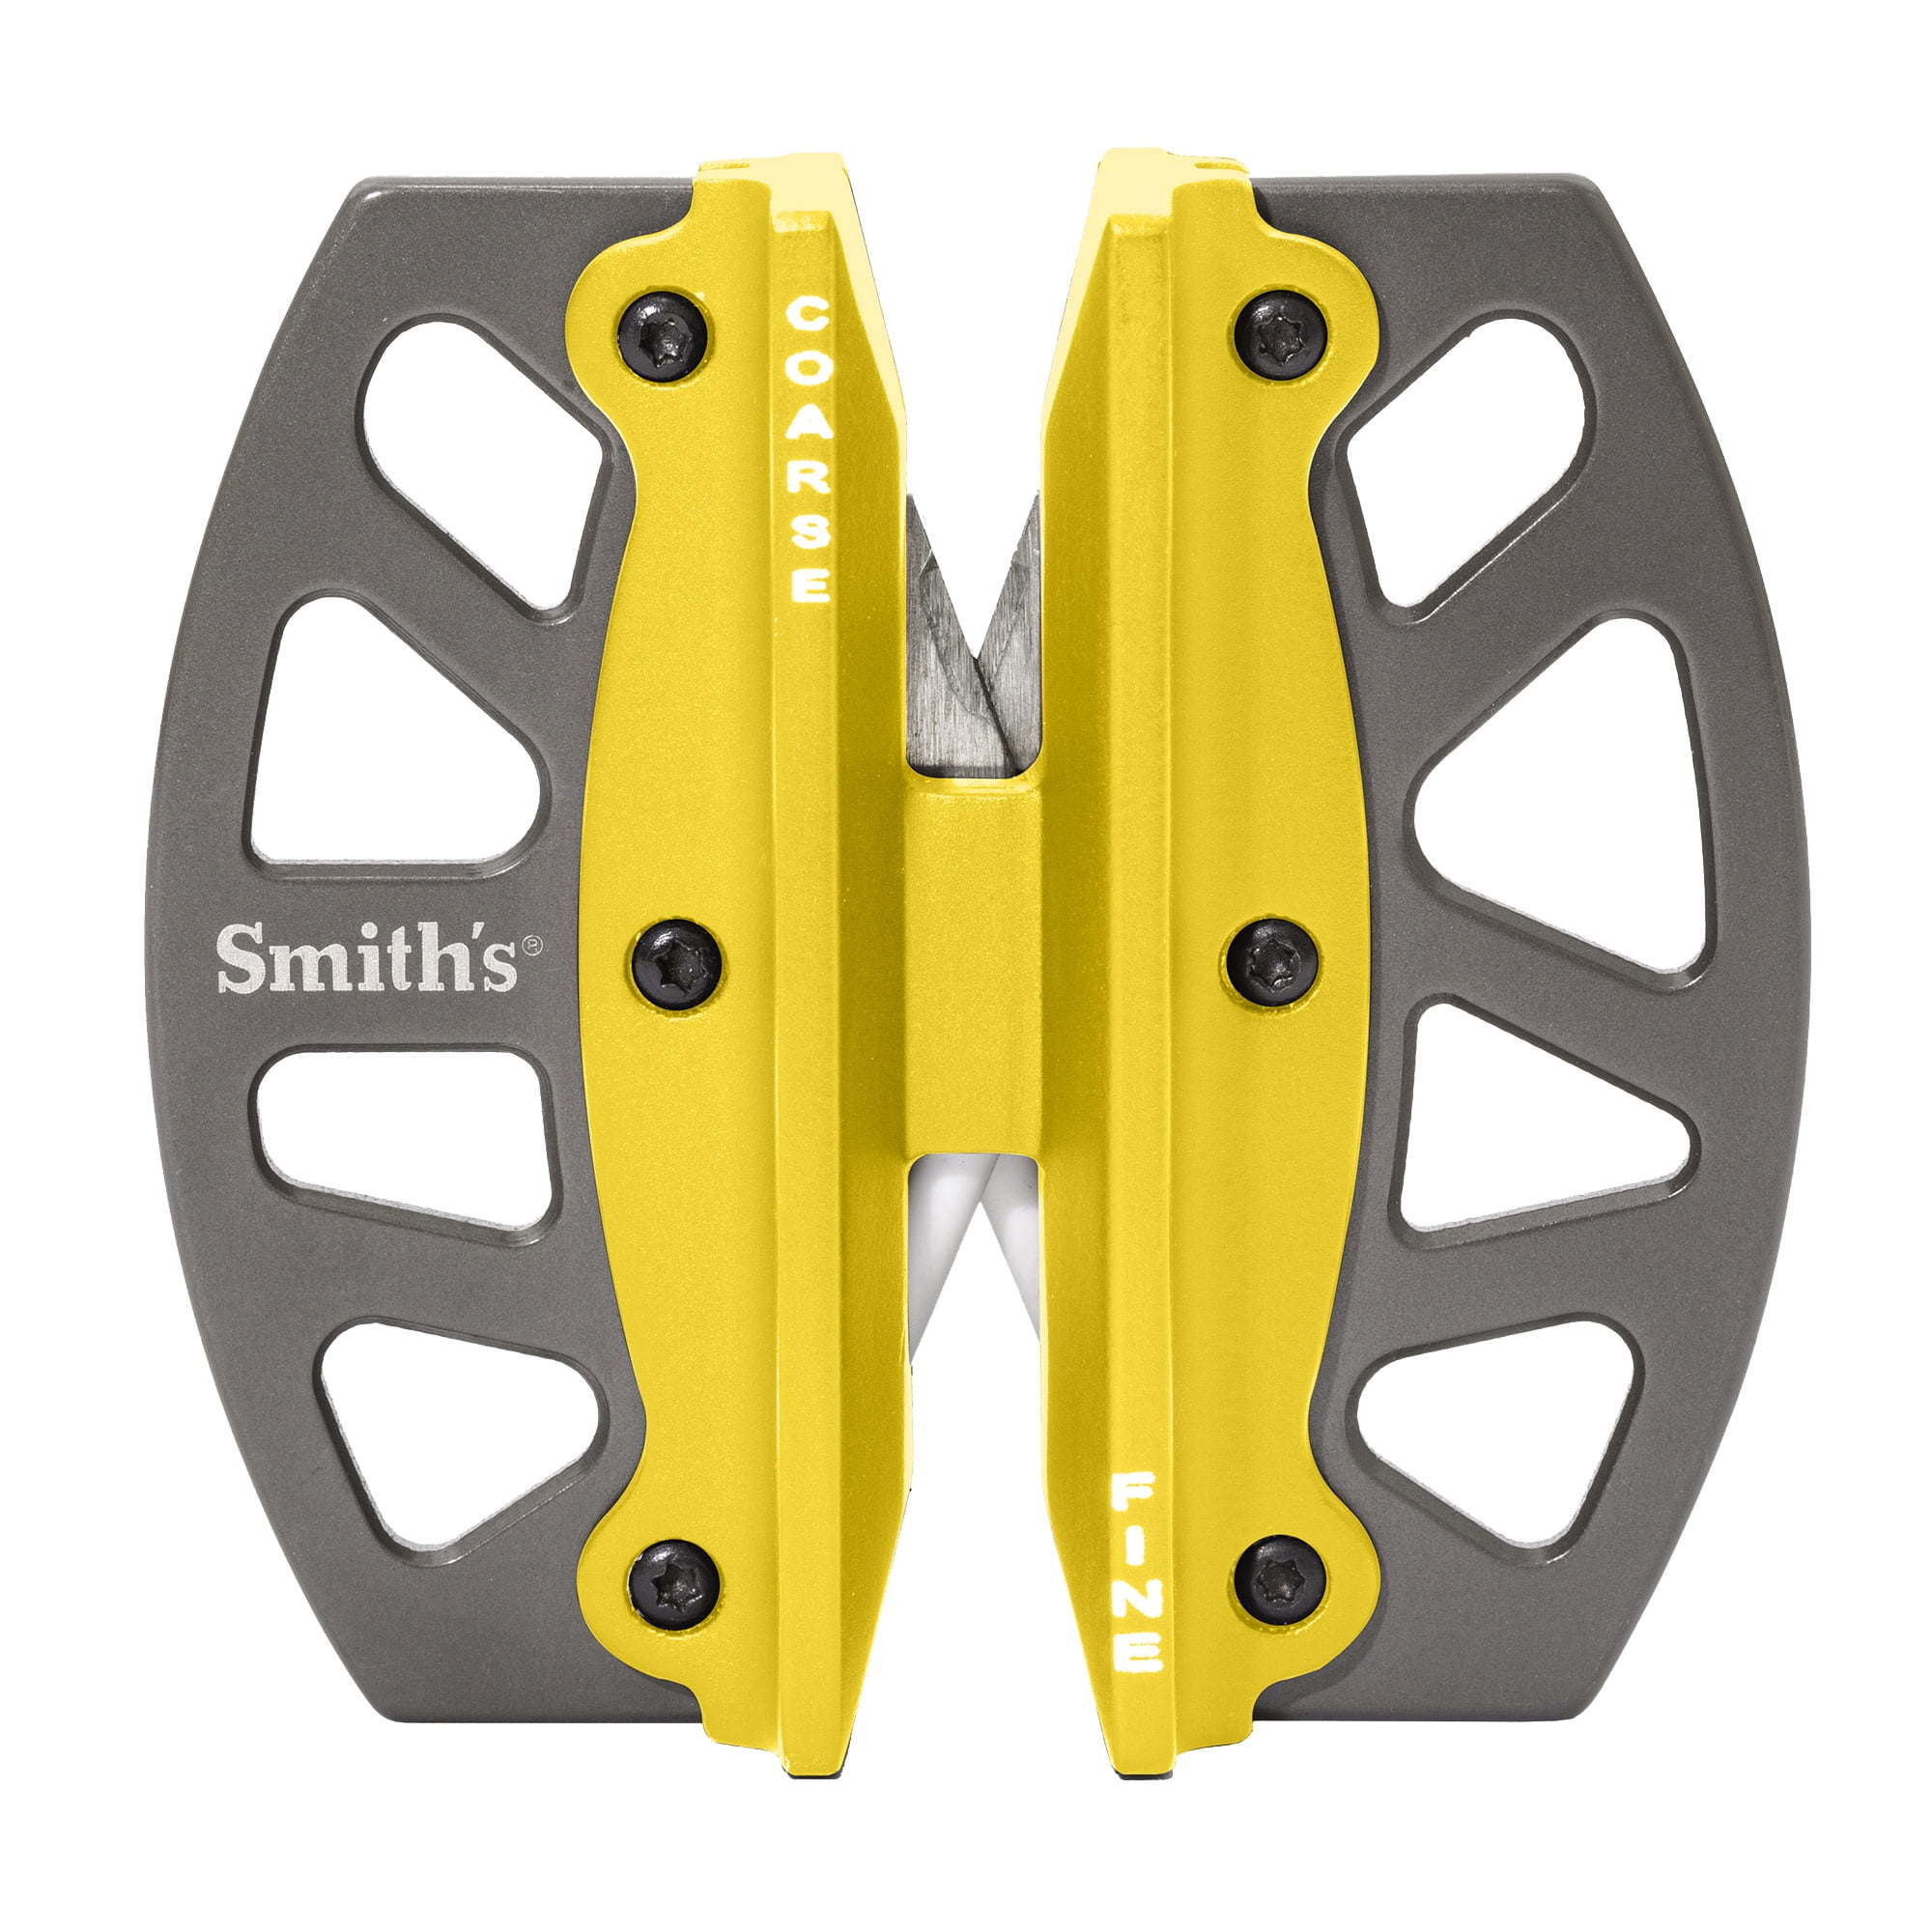 Smith's 2-Step Sharpener 51176